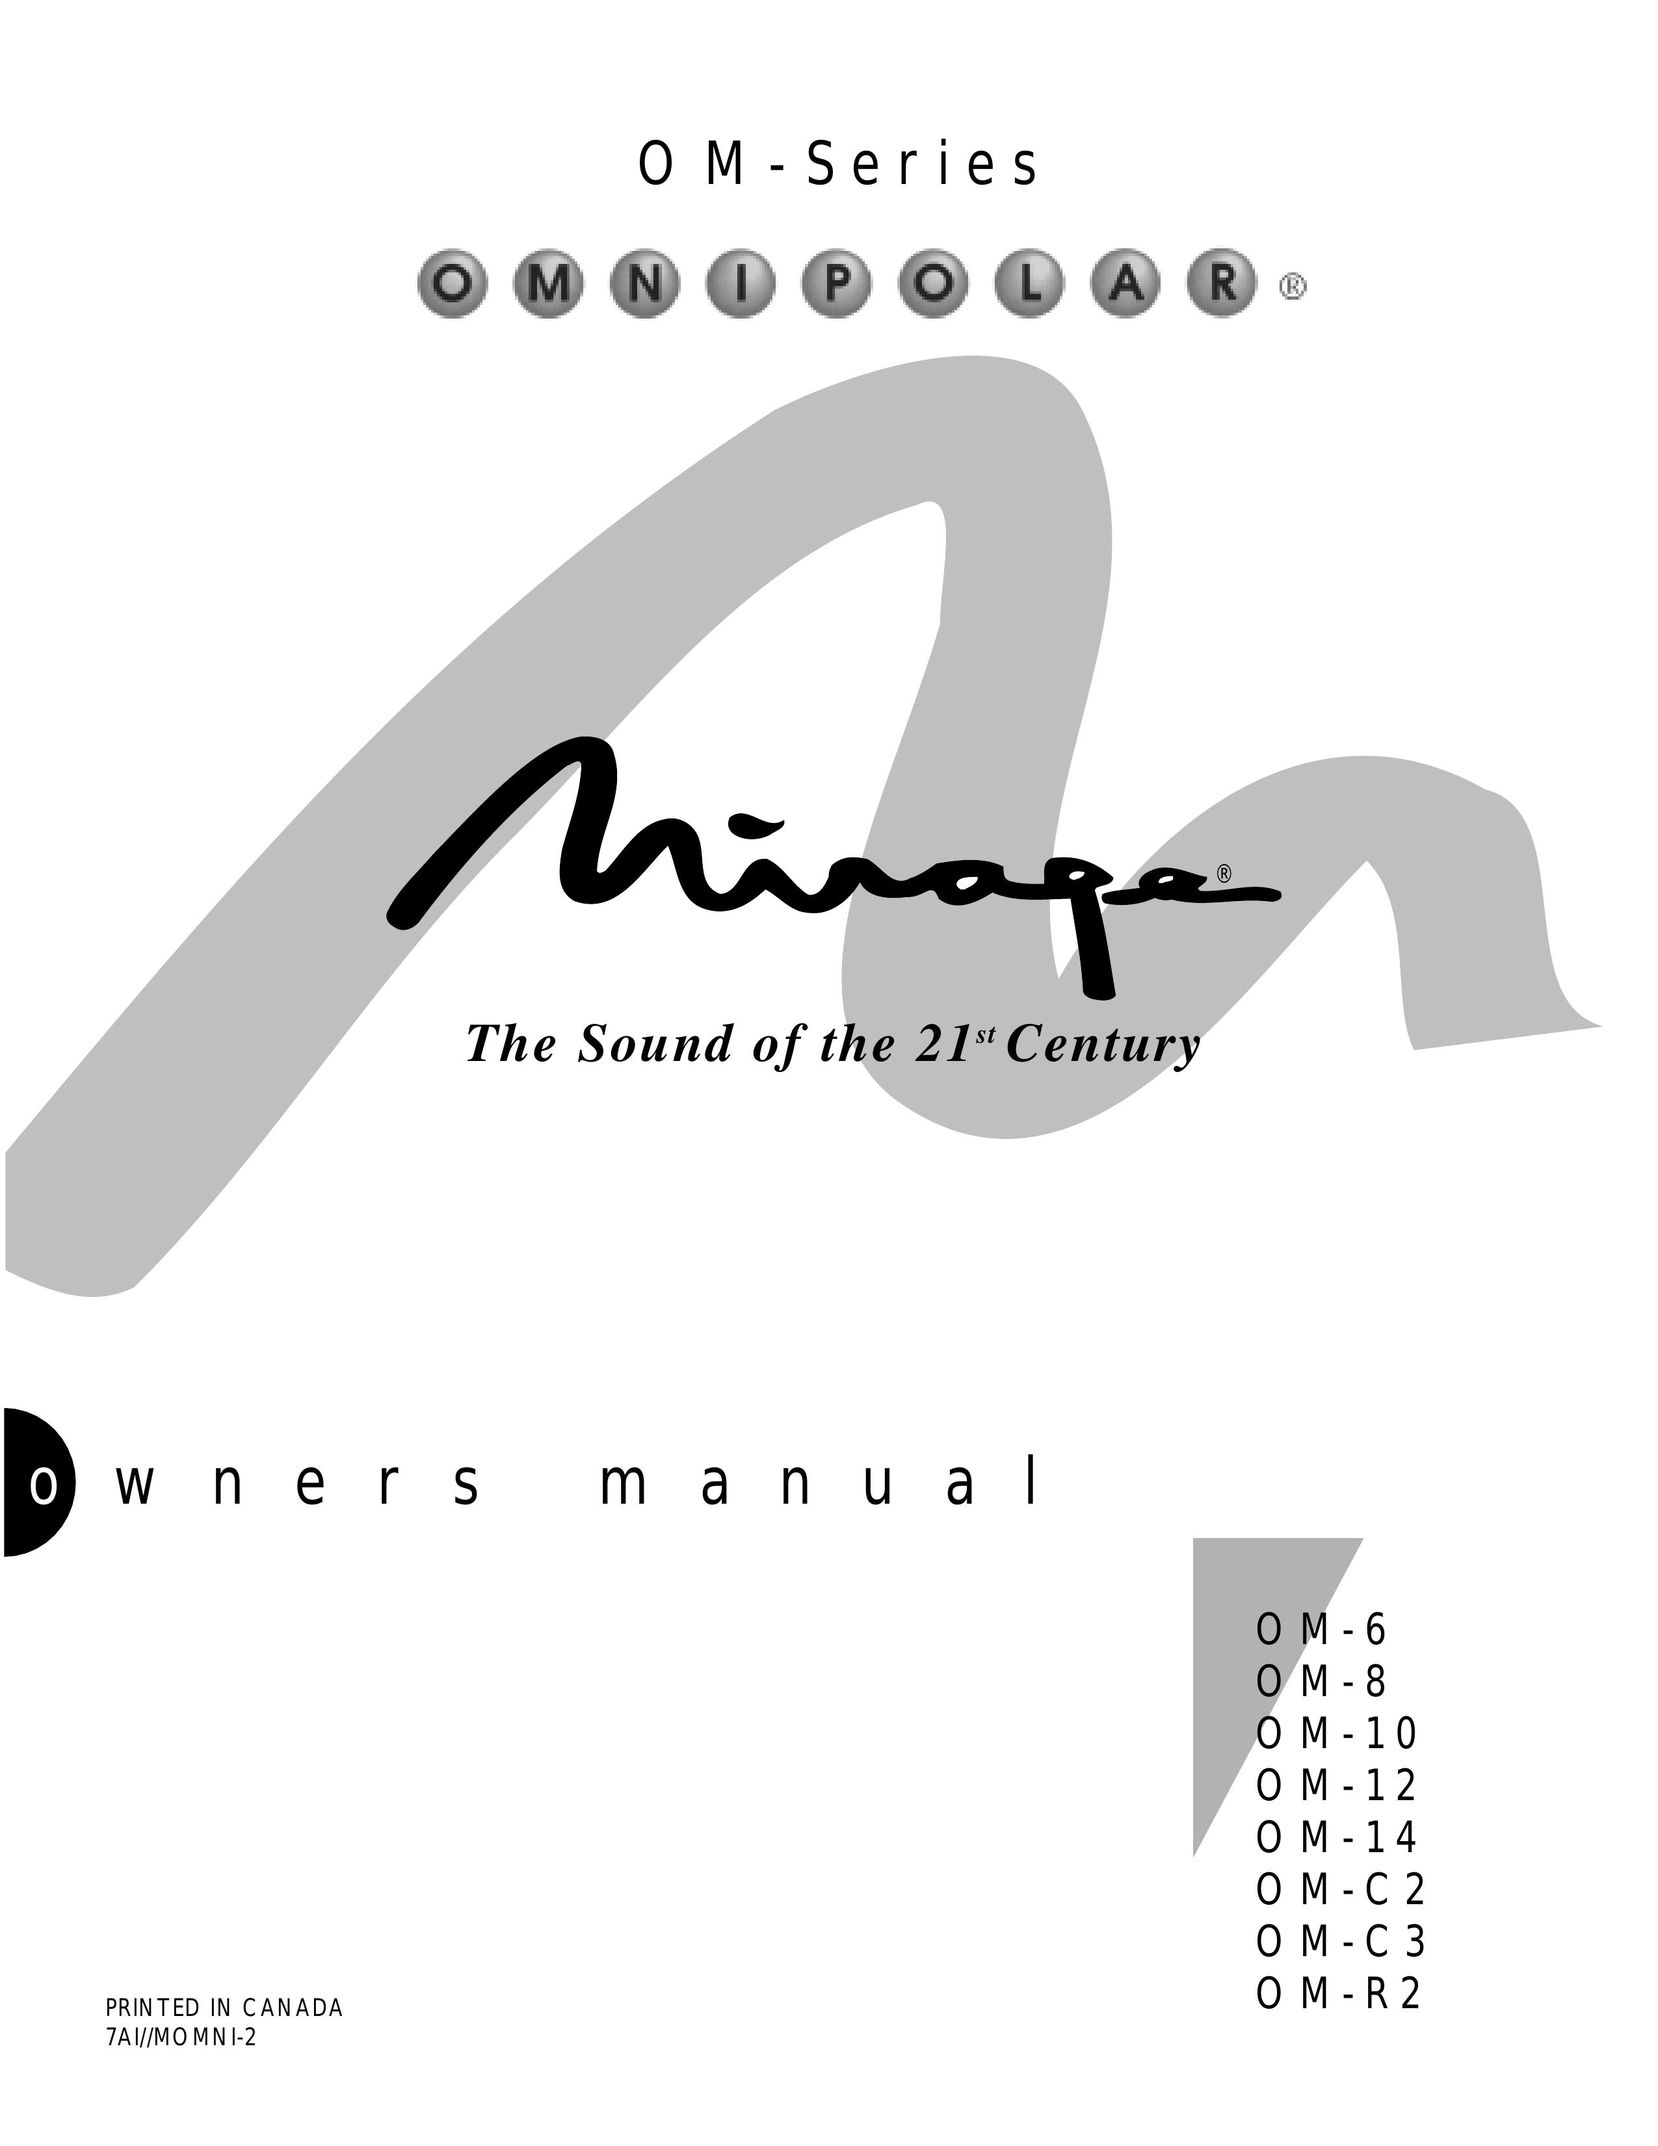 Mirage Loudspeakers O M - 1 0 Speaker User Manual